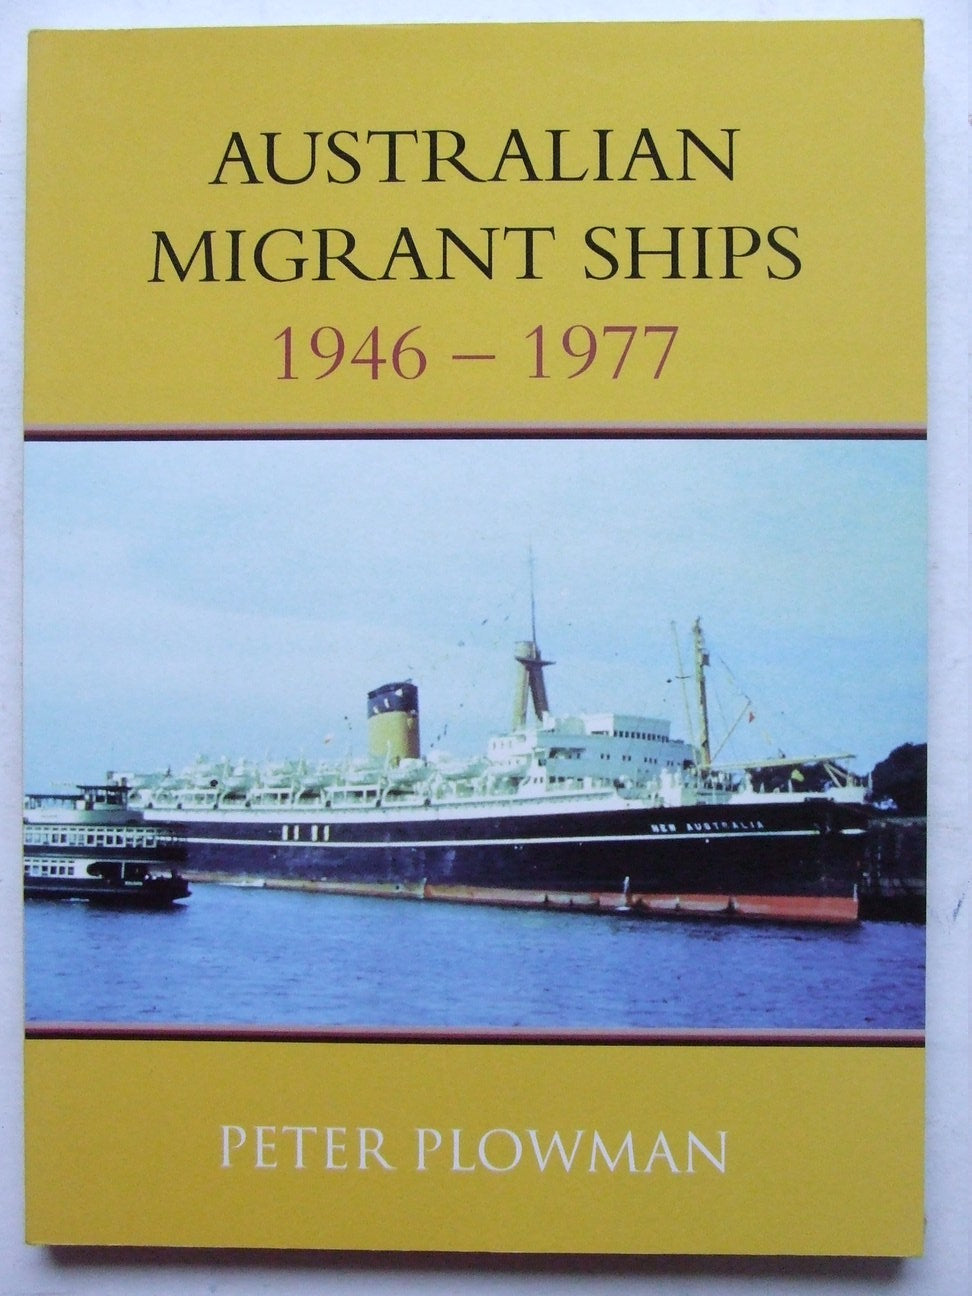 Australian Migrant Ships 1946-1947